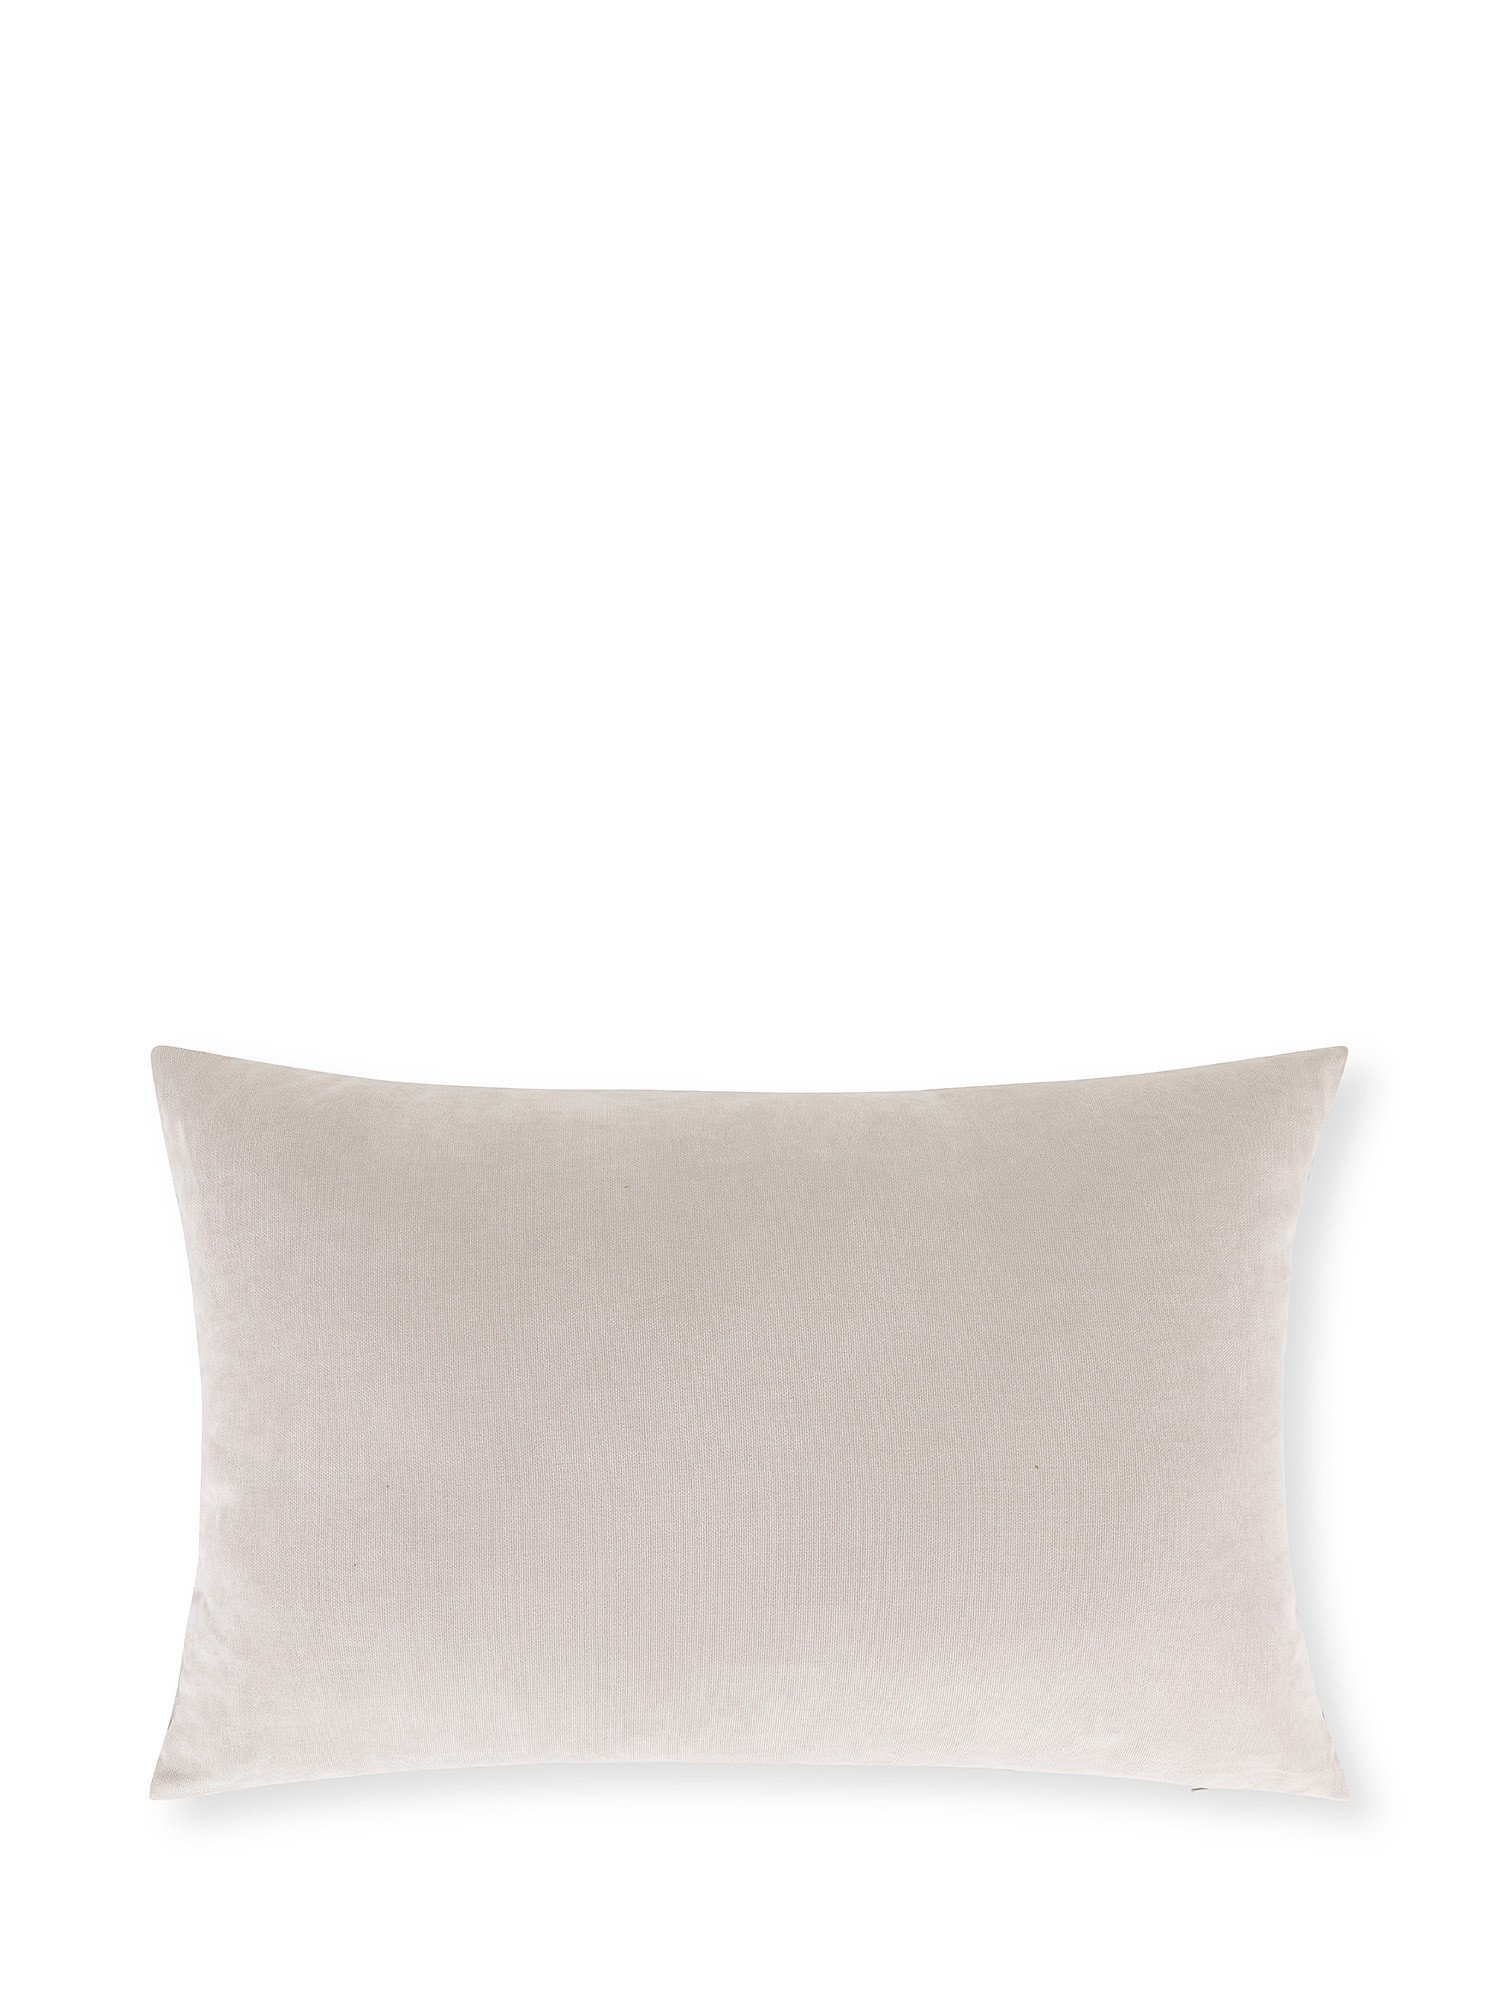 Jacquard cushion with geometric pattern 35x55cm, Beige, large image number 1